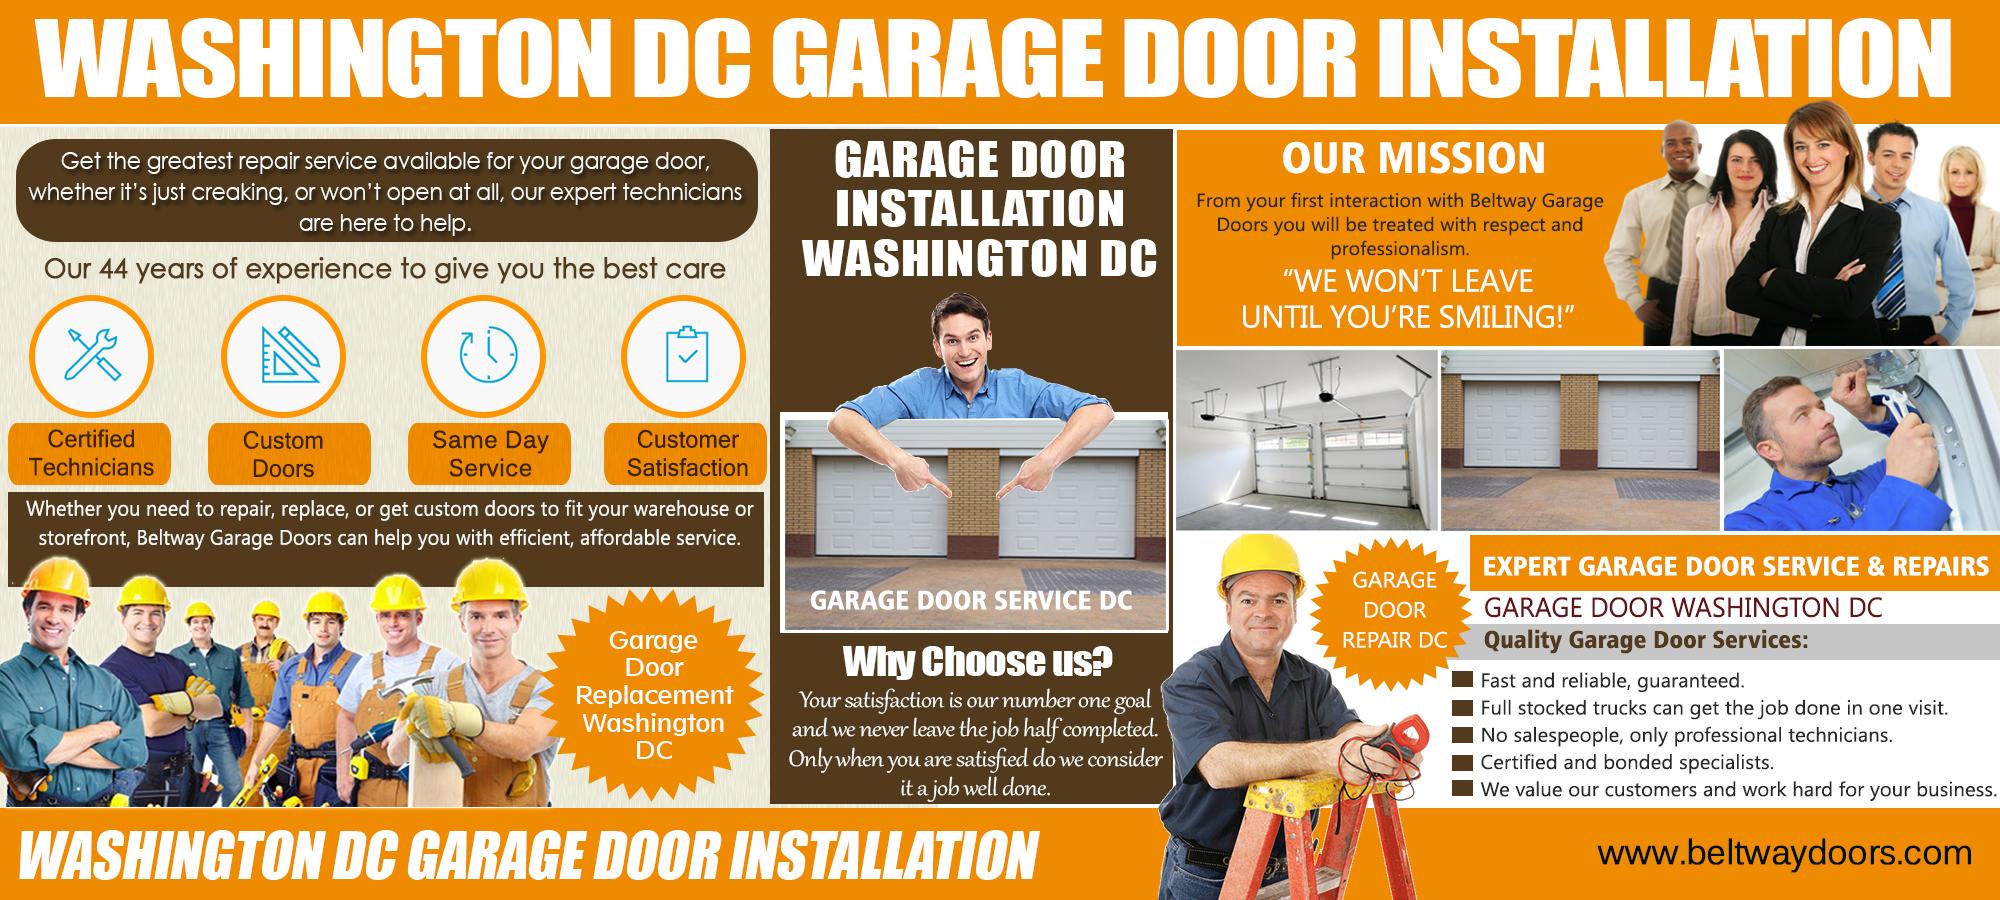 Washington Dc Garage Door Installation